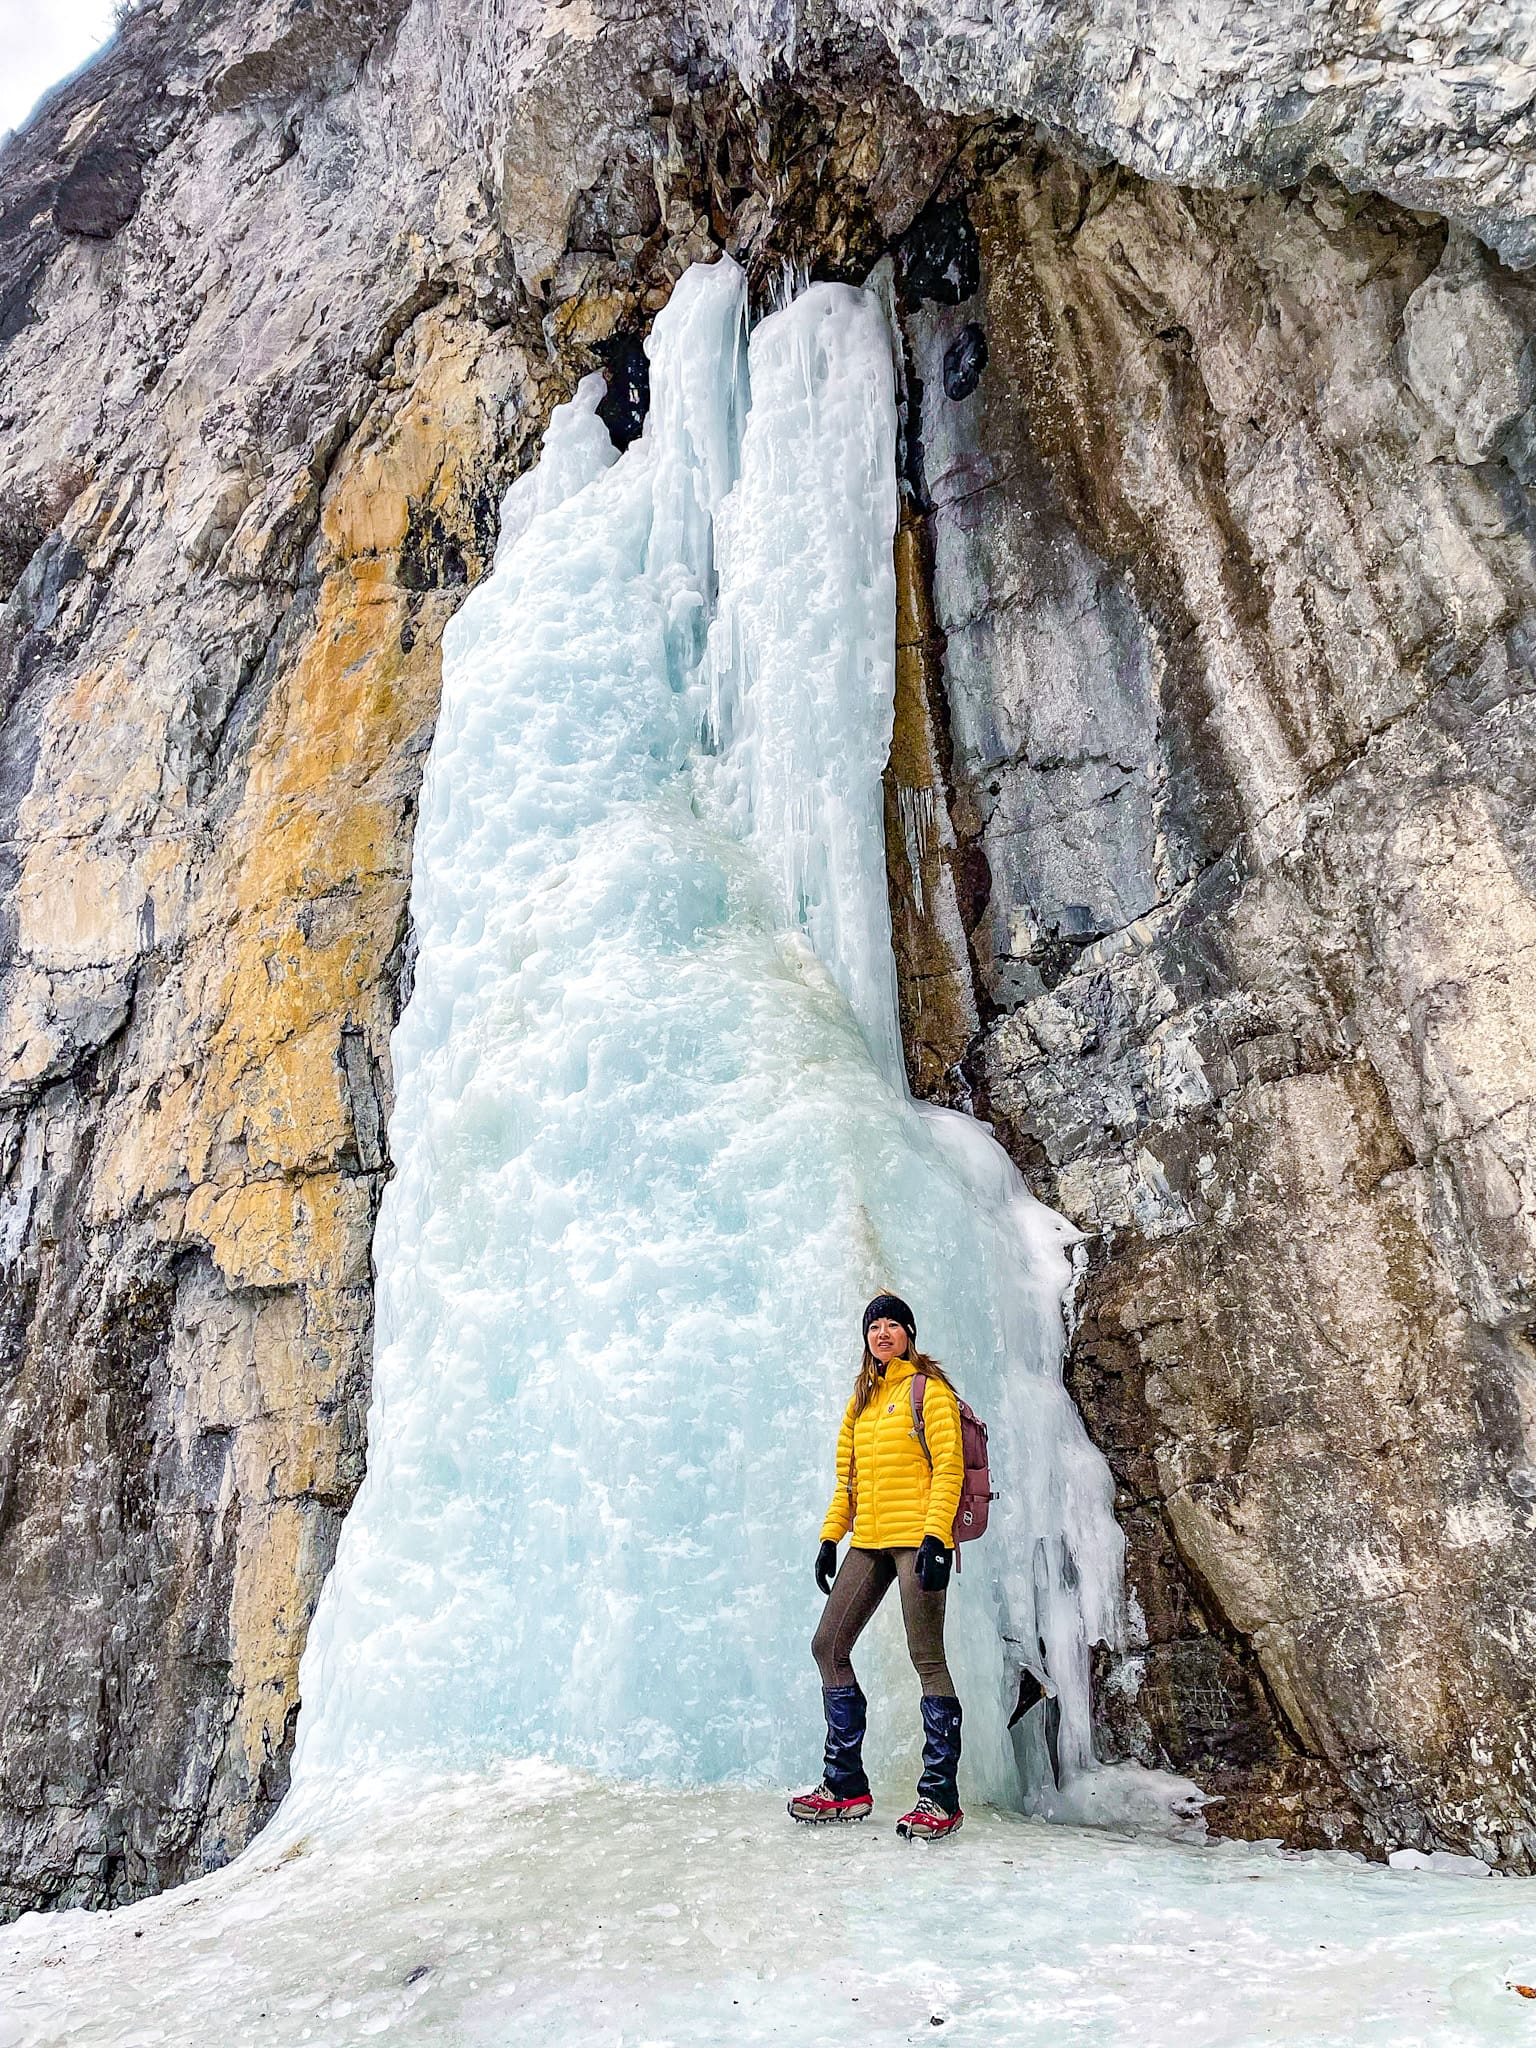 grotto canyon frozen waterfall